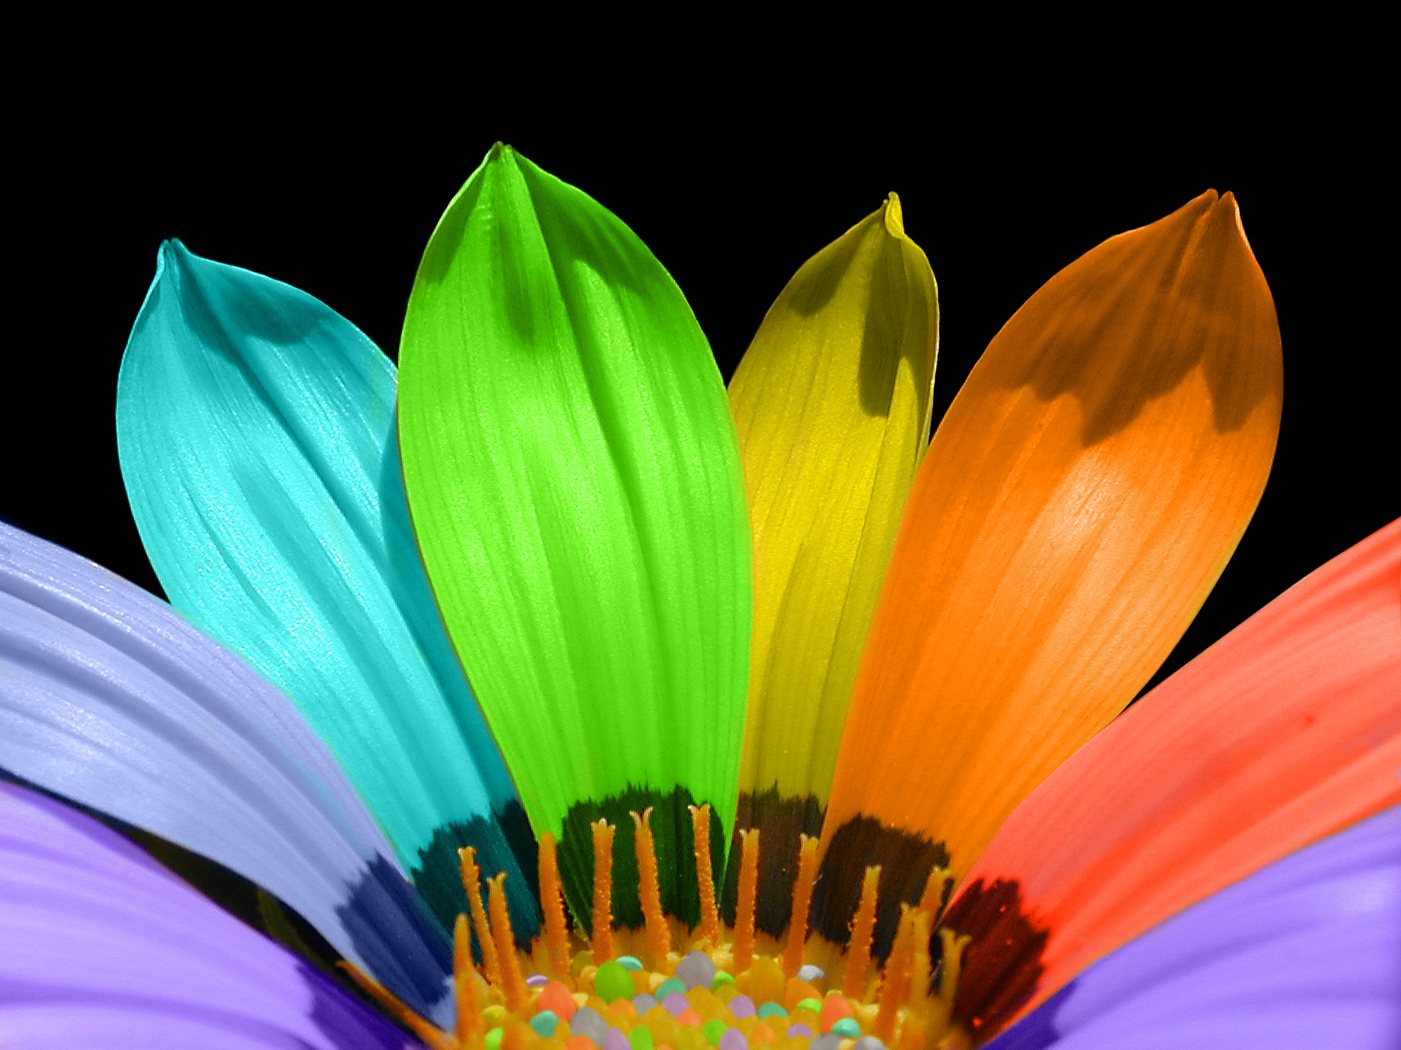 rainbow_flower